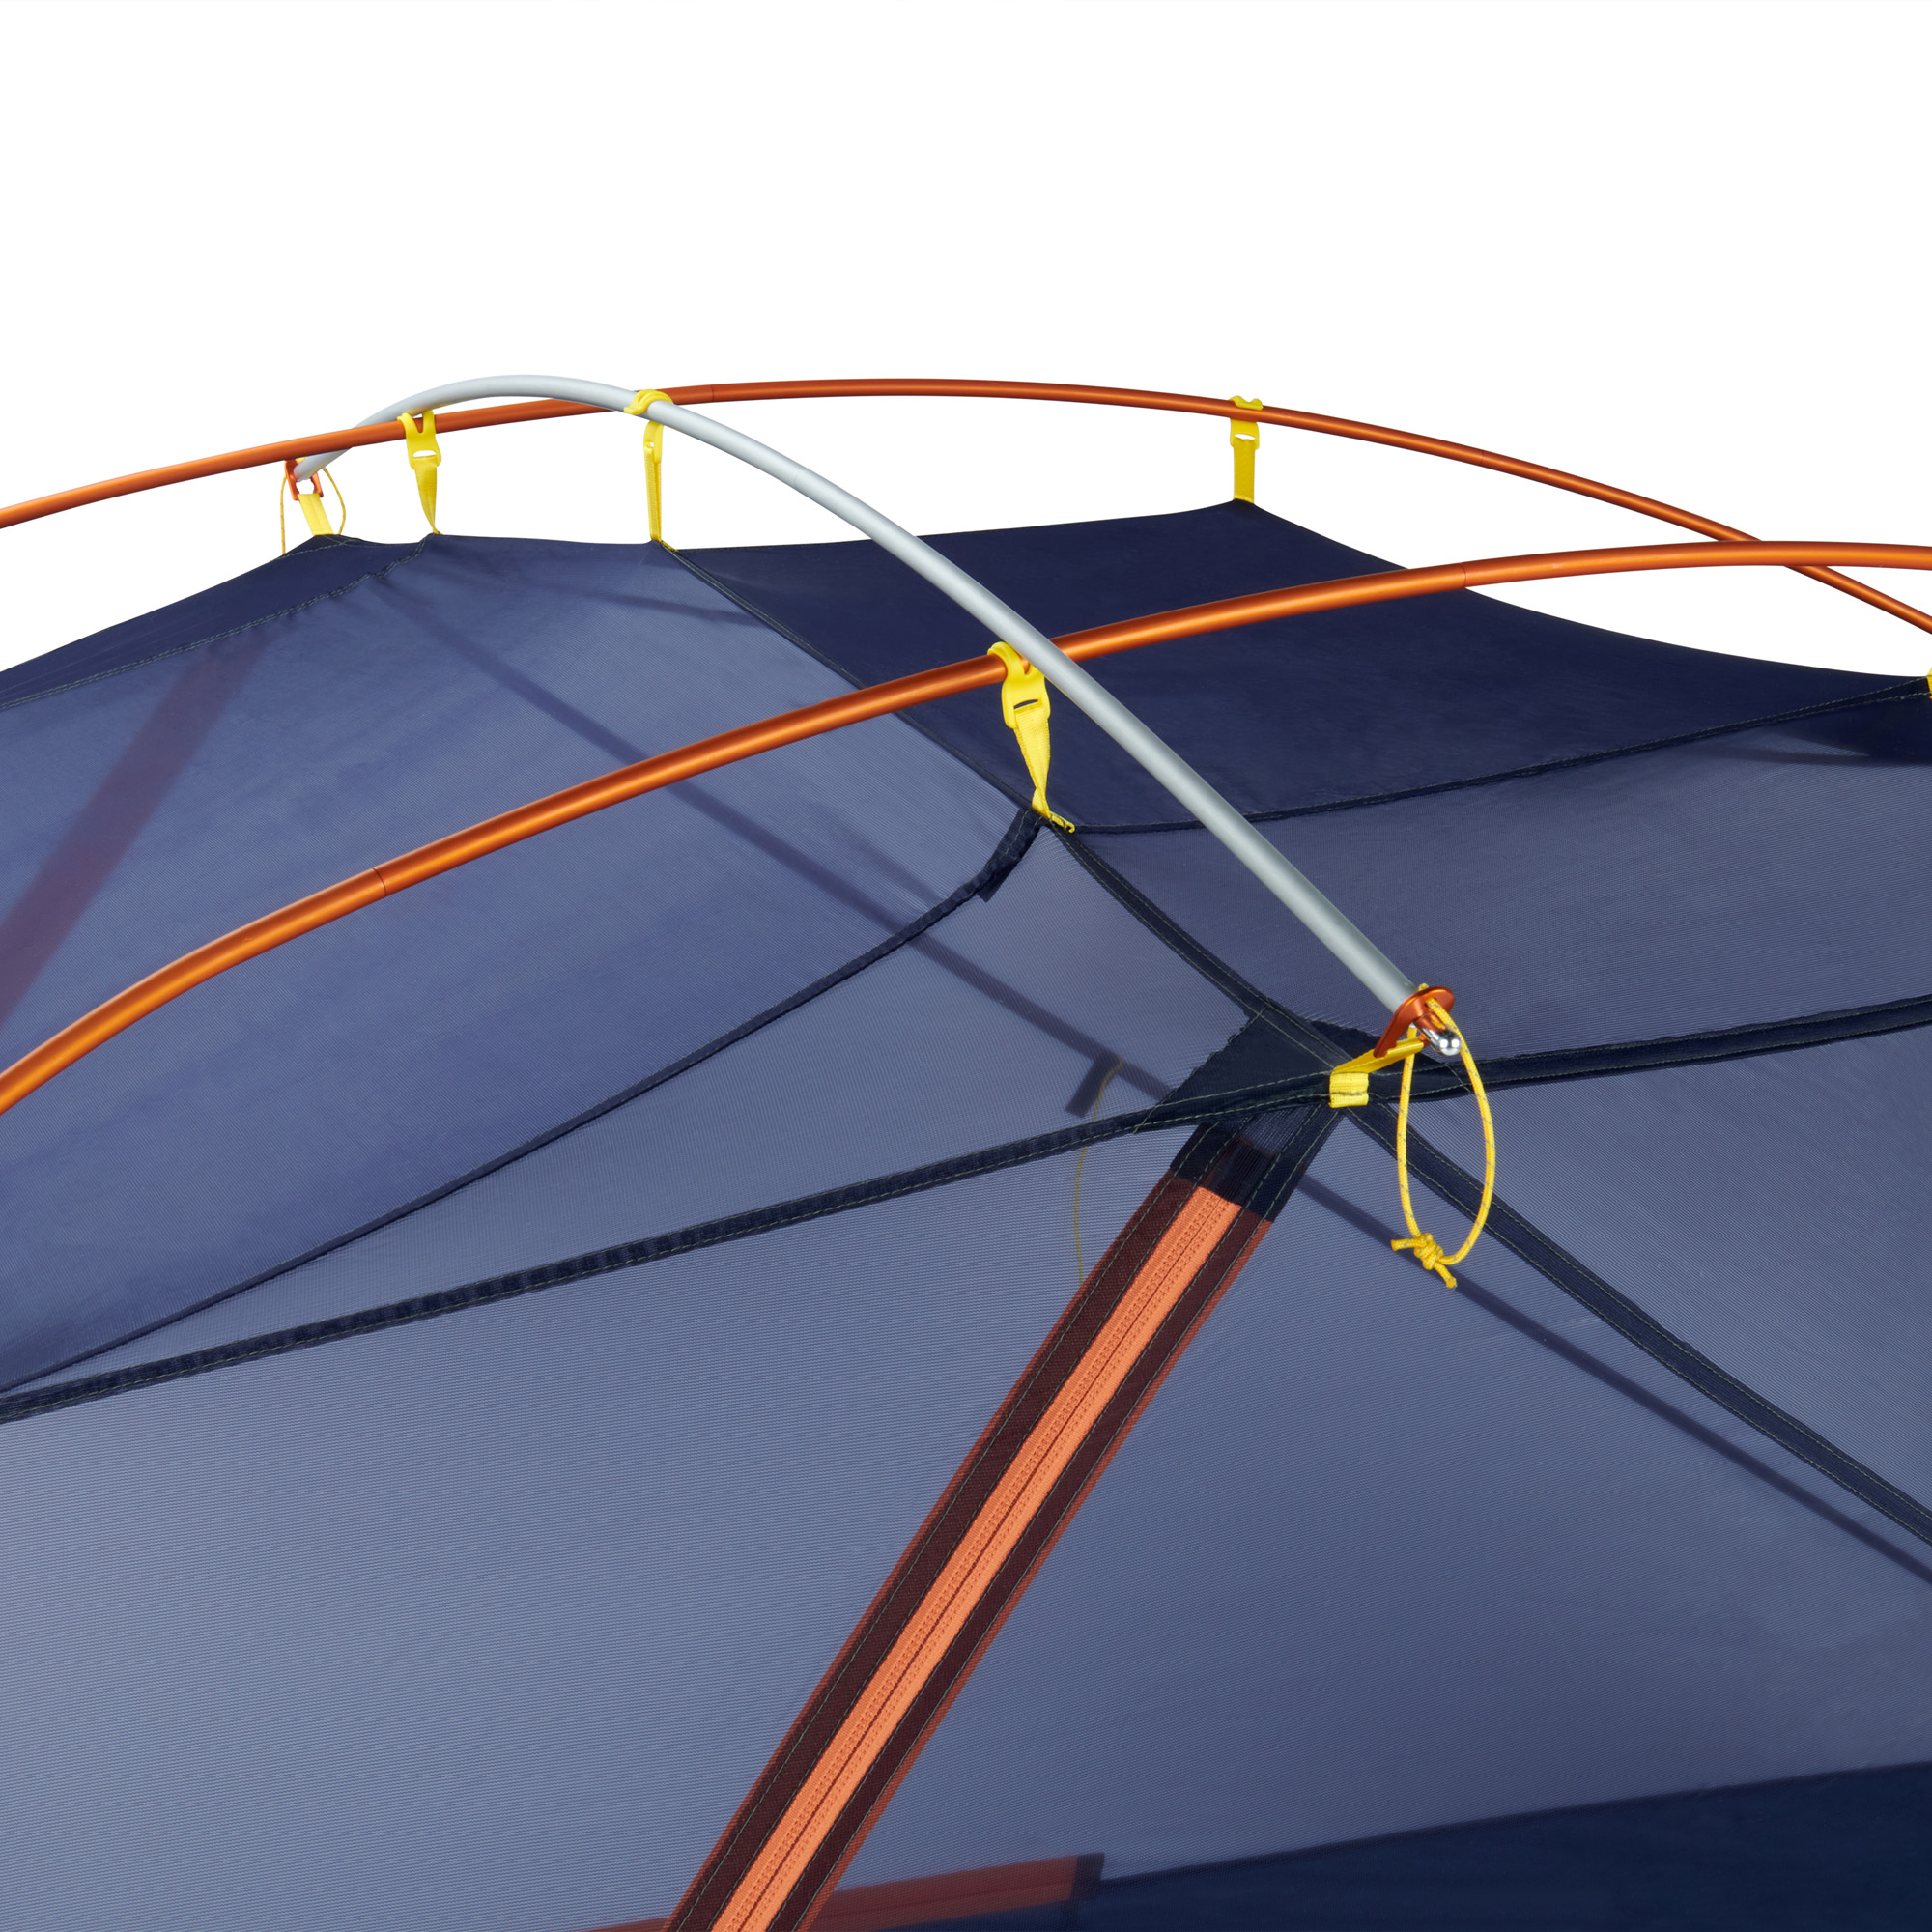 Sierra Designs Litehouse 2 Ultralight Backpacking Tent